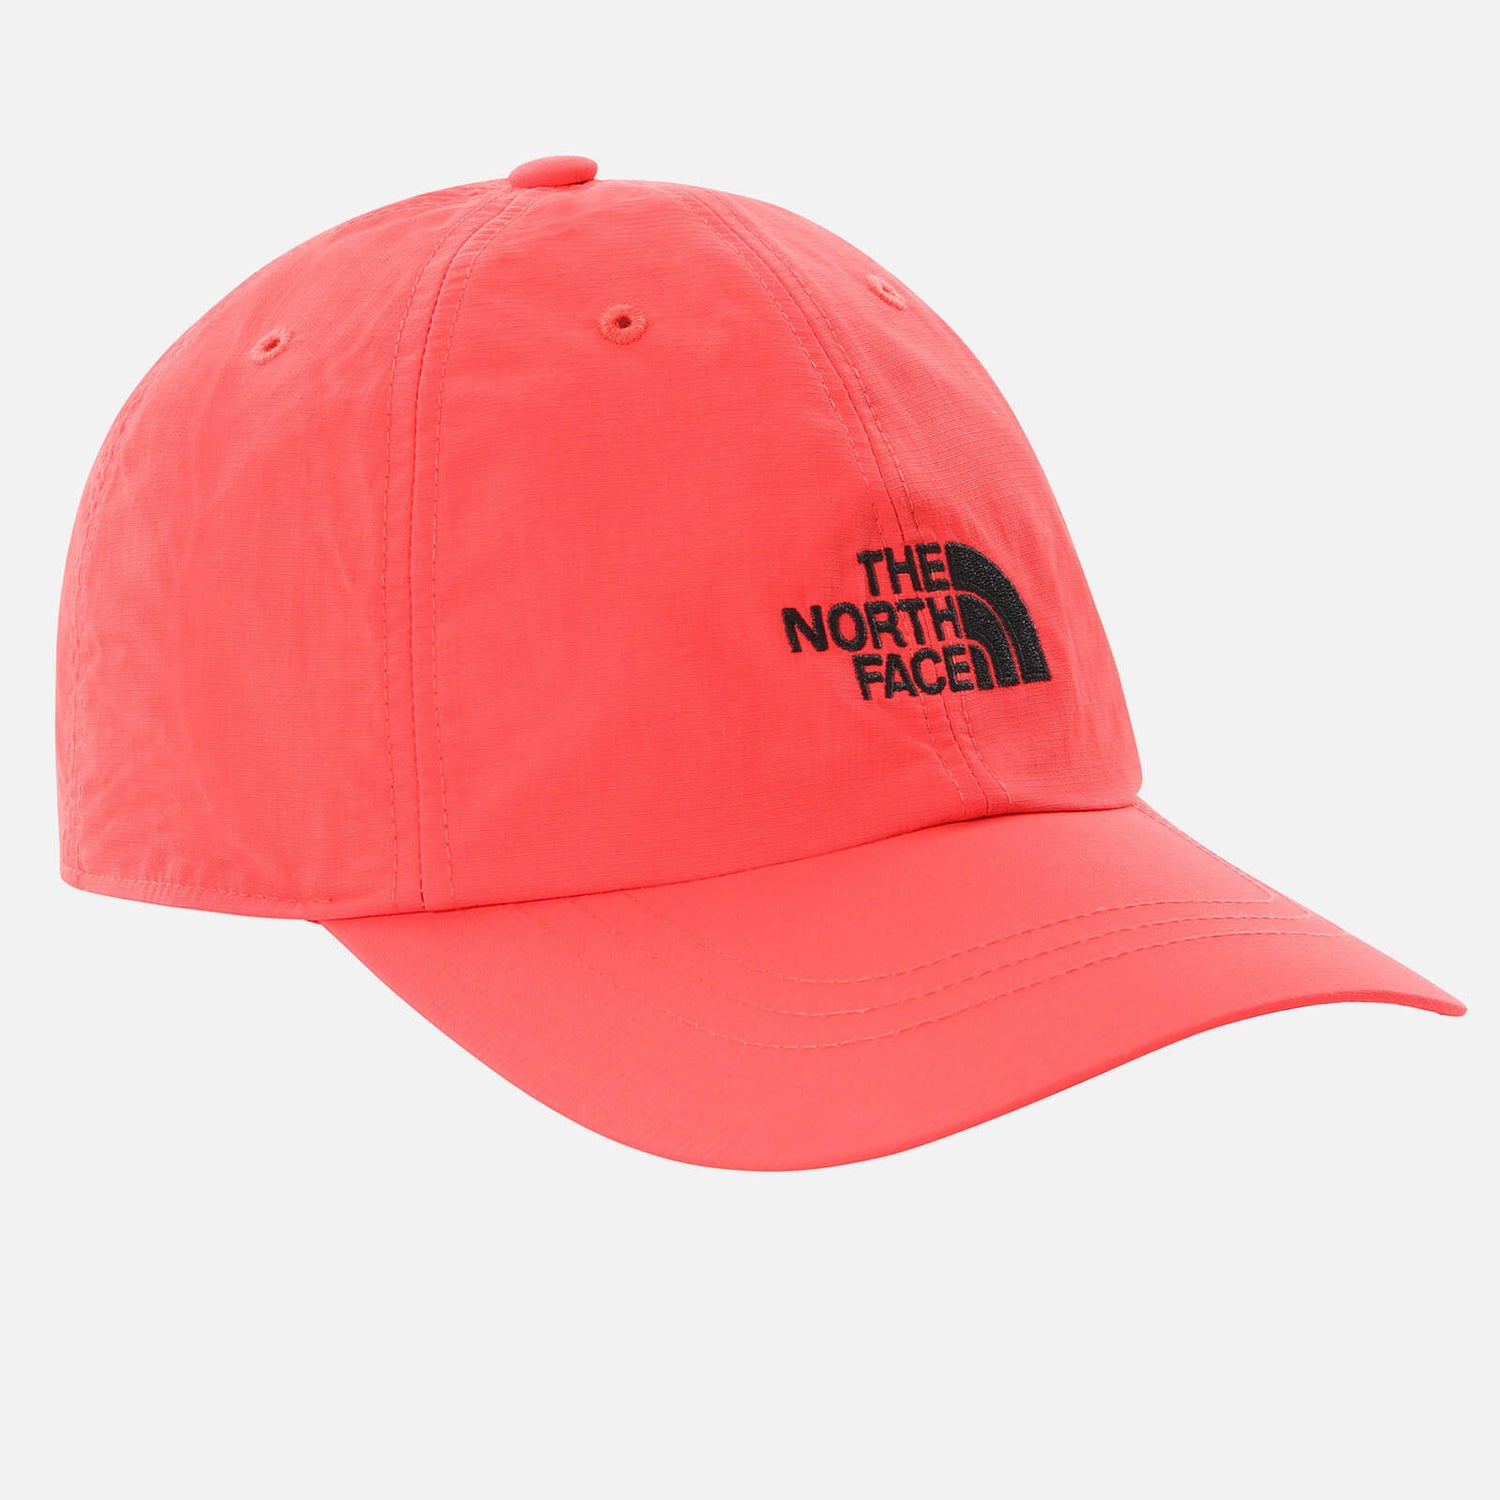 The North Face Horizon Cap - Horizon Red